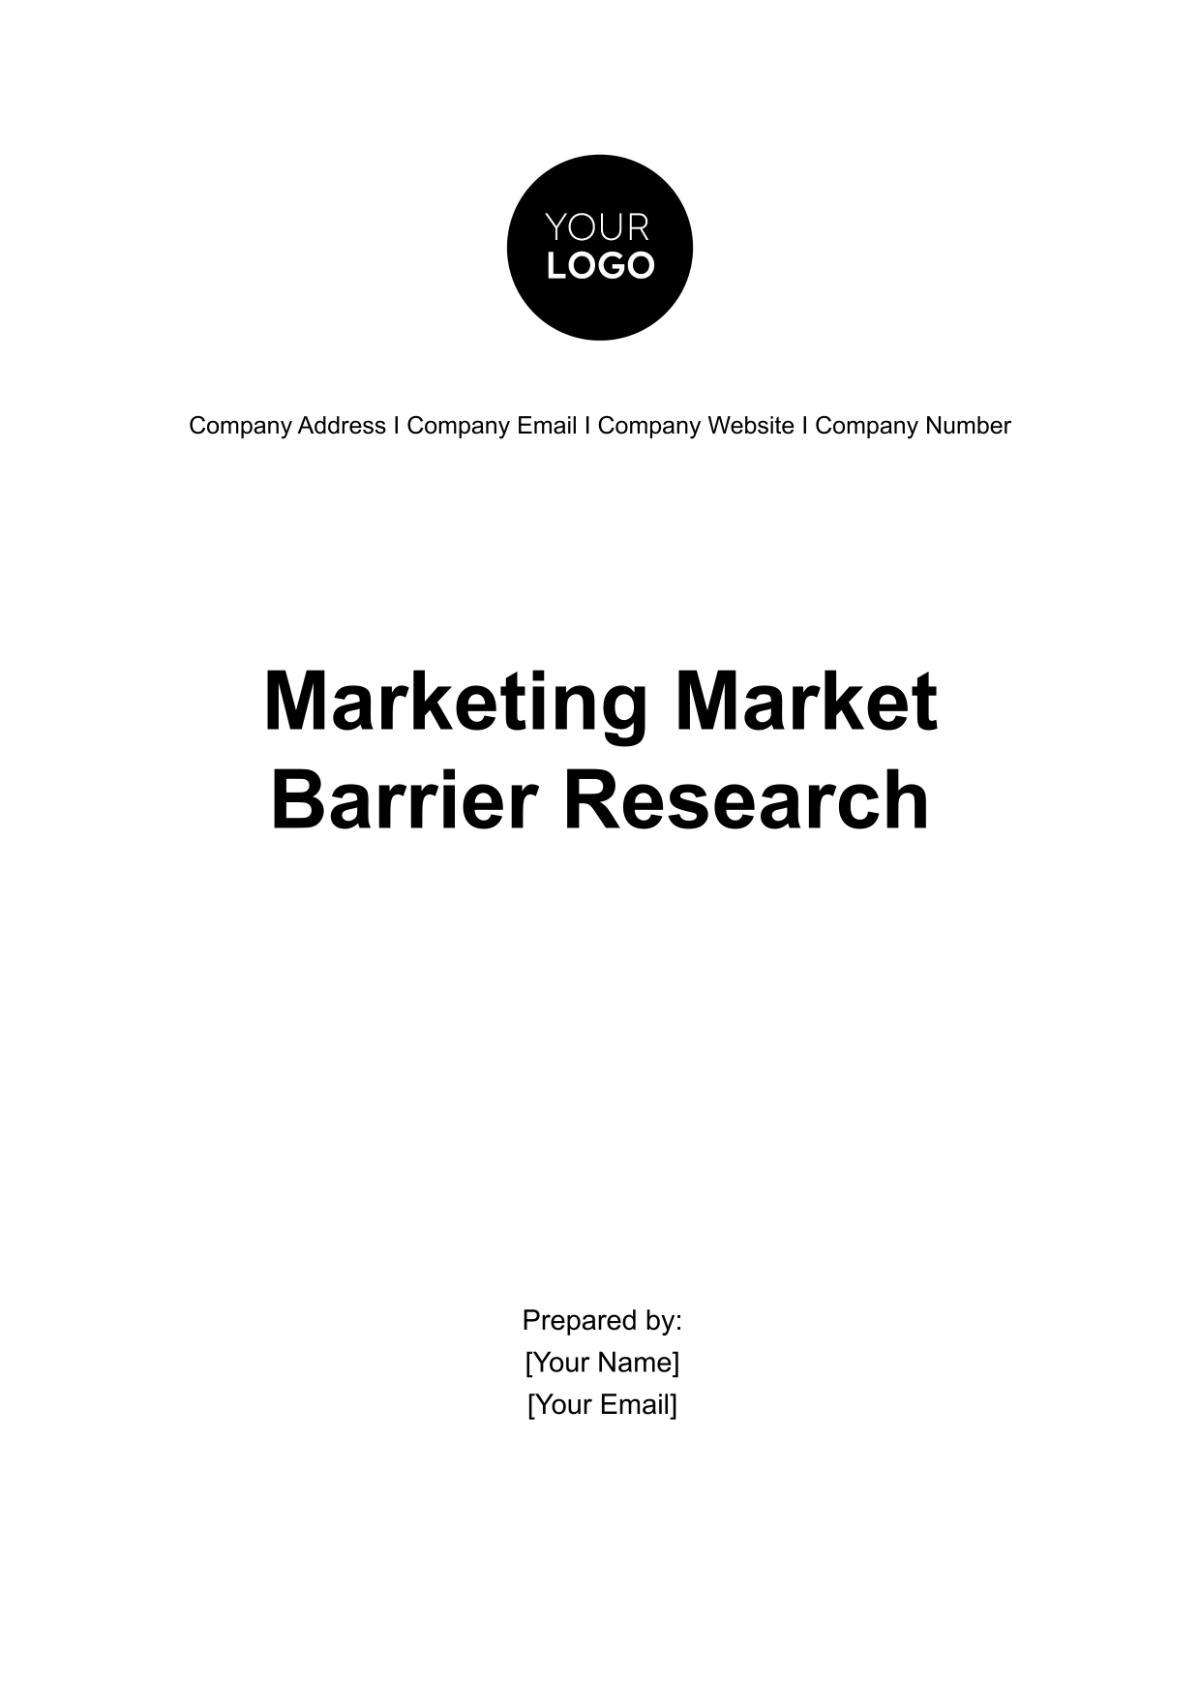 Marketing Market Barrier Research Template